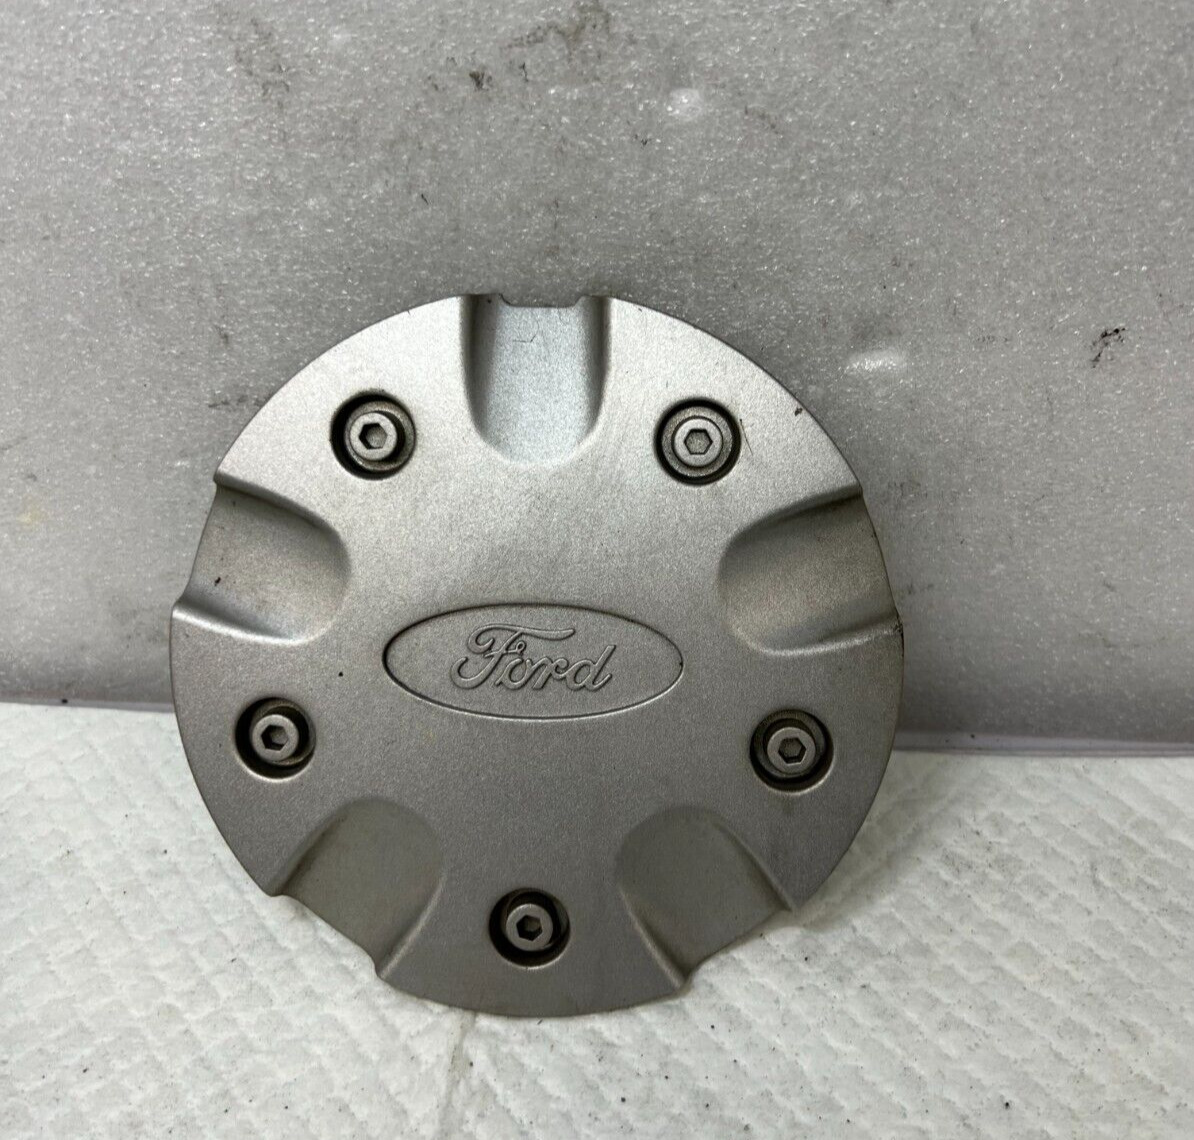 2001 Ford ESCORT  Wheel Center Cap Cover 2M51-1130-BA OEM (7)